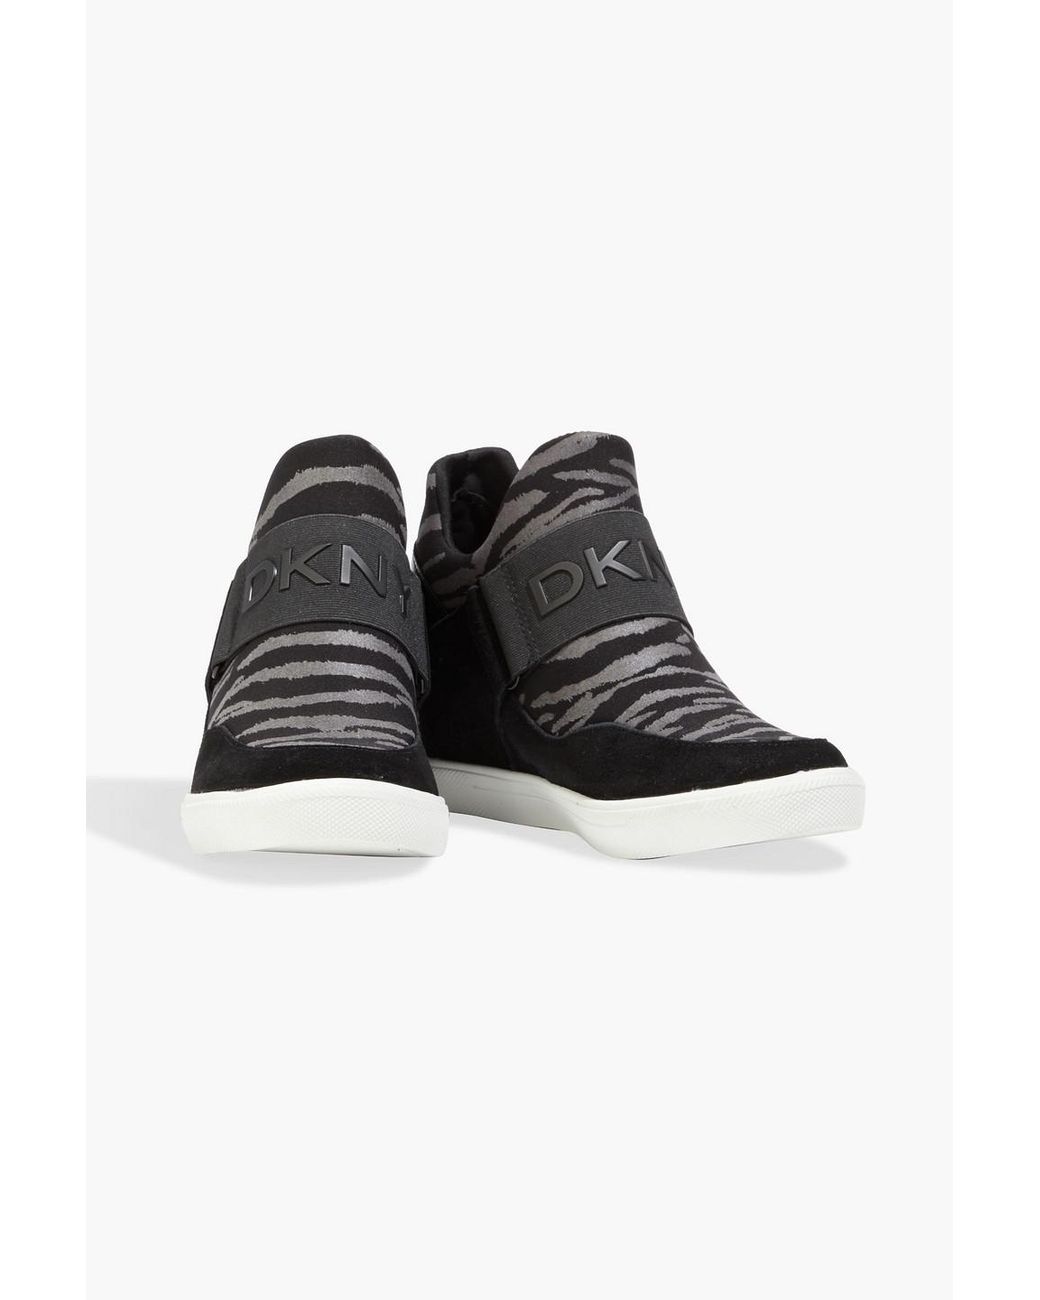 DKNY Cosmos Zebra-print Stretch-knit Wedge Sneakers in Black | Lyst